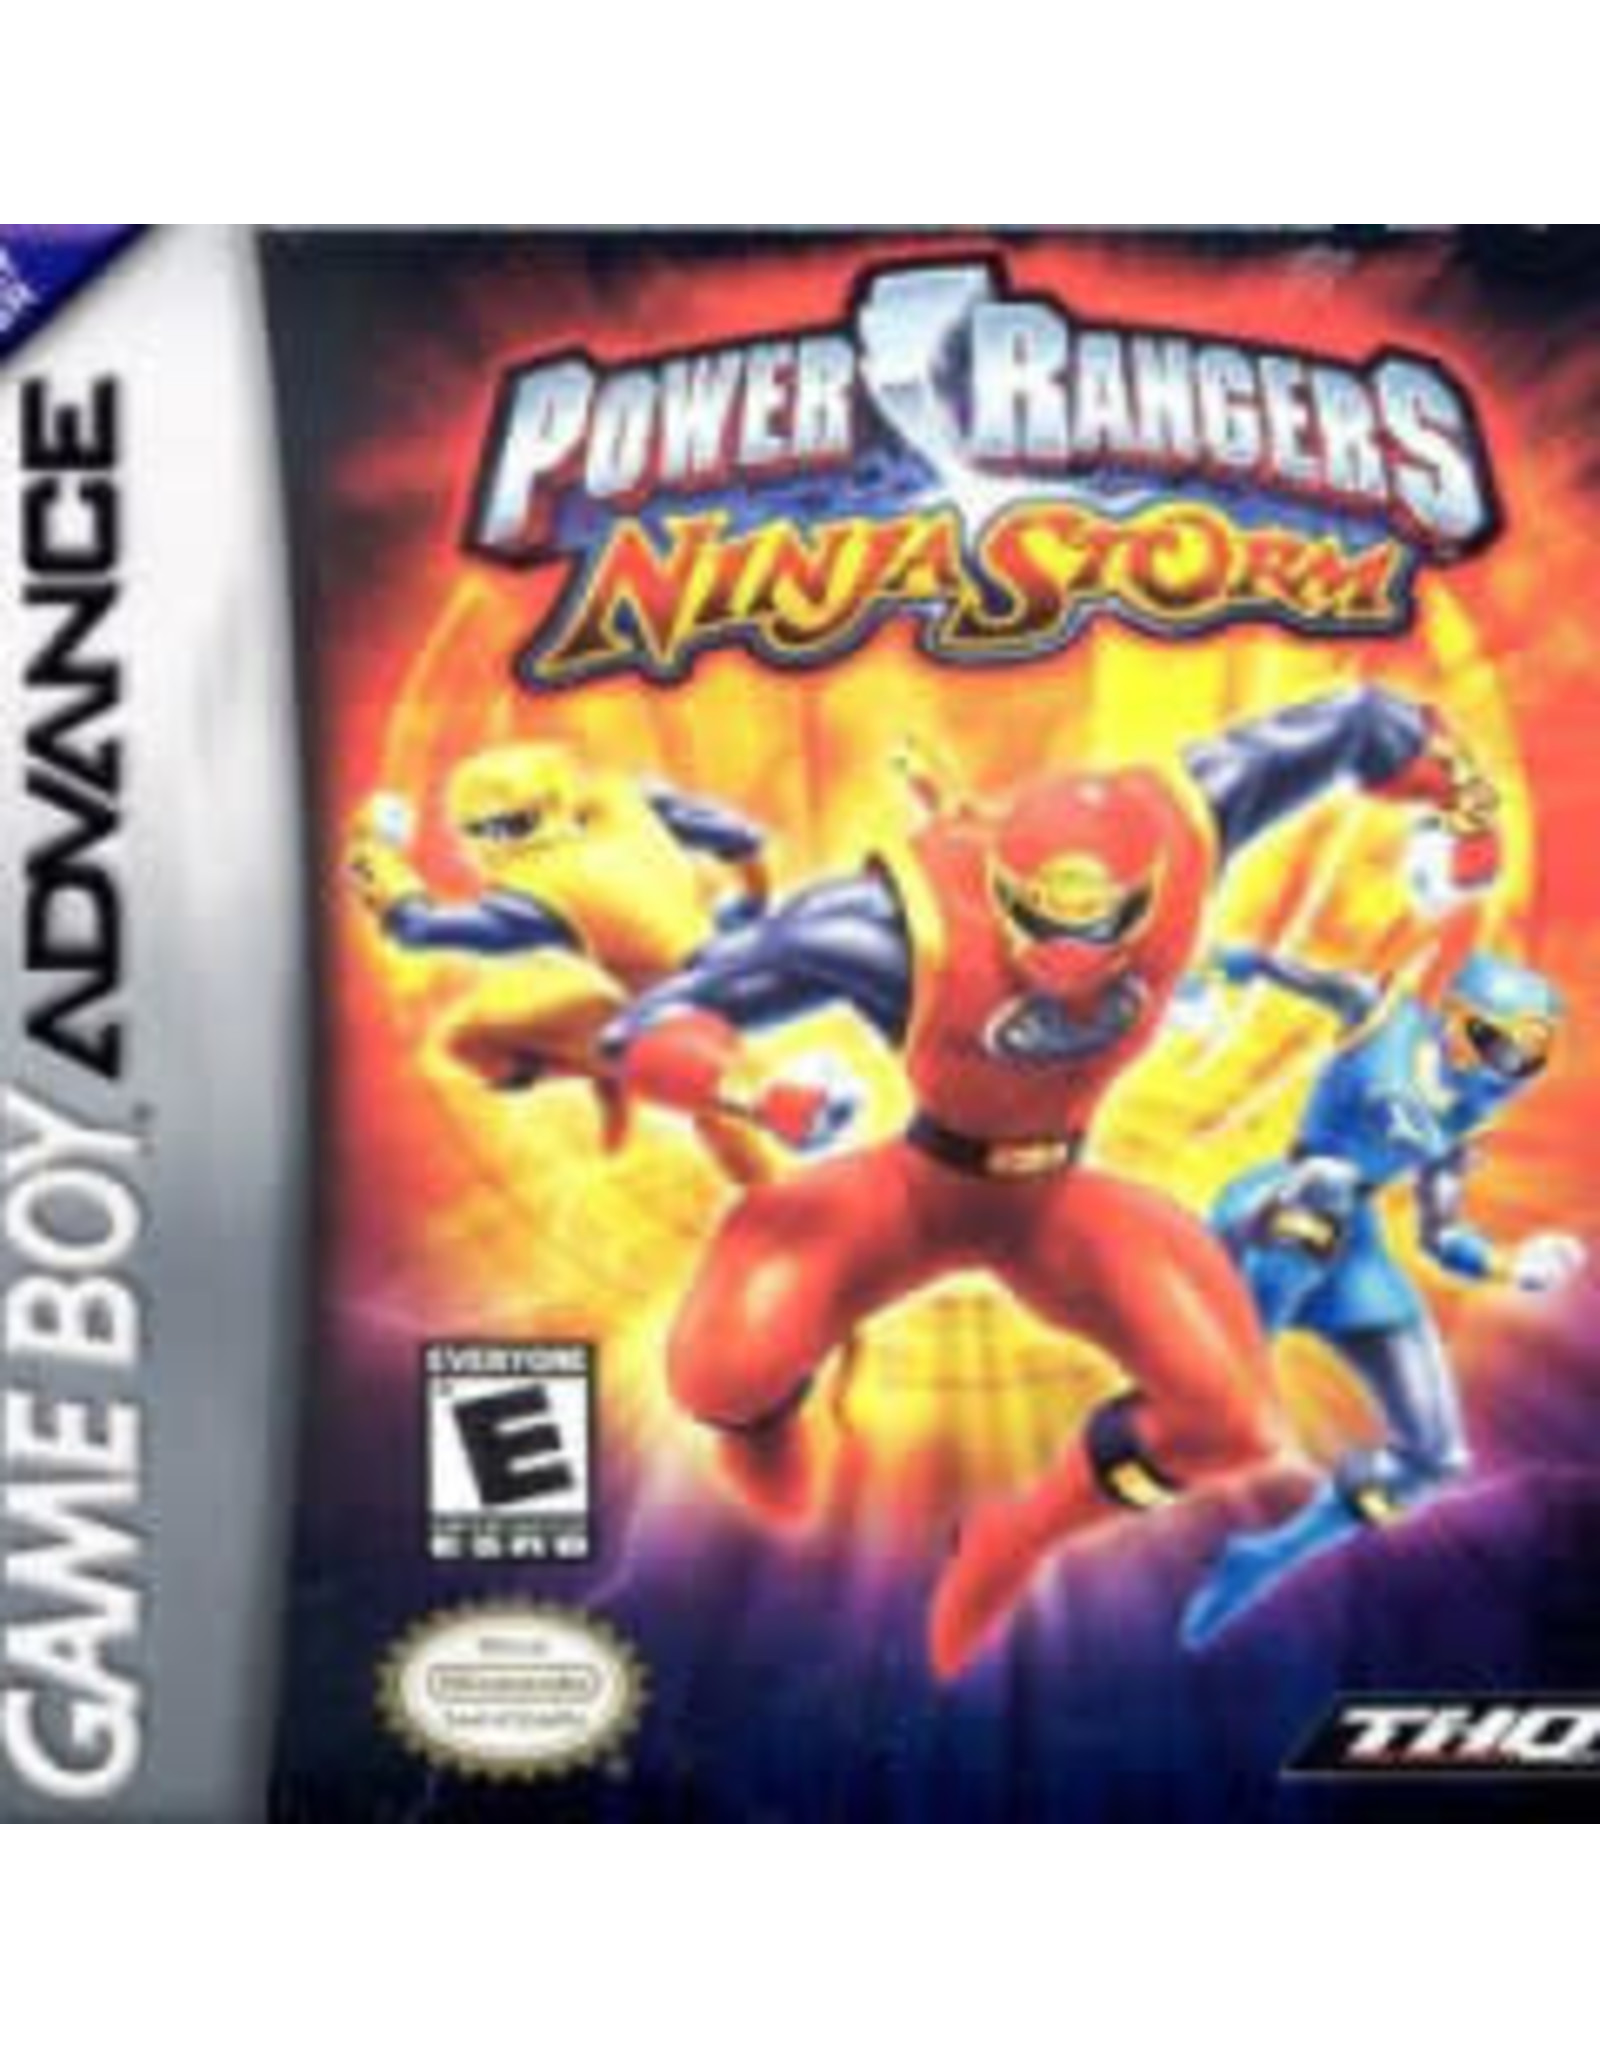 Game Boy Advance Power Rangers Ninja Storm (Cart Only, Damaged Label)